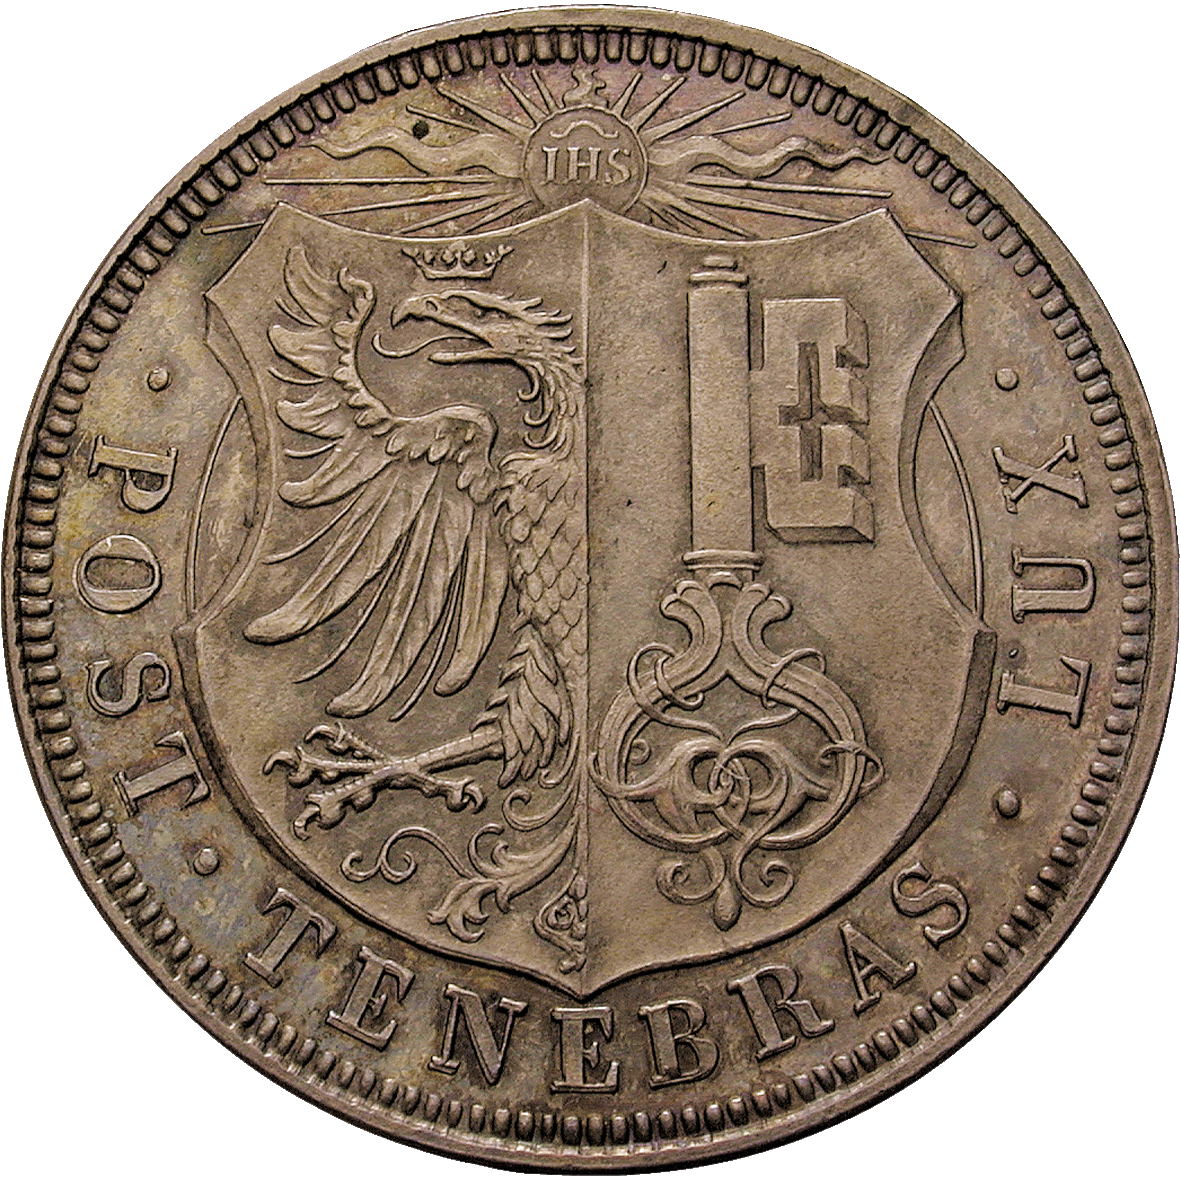 Canton and Republic of Geneva, 5 Francs 1848 (obverse)